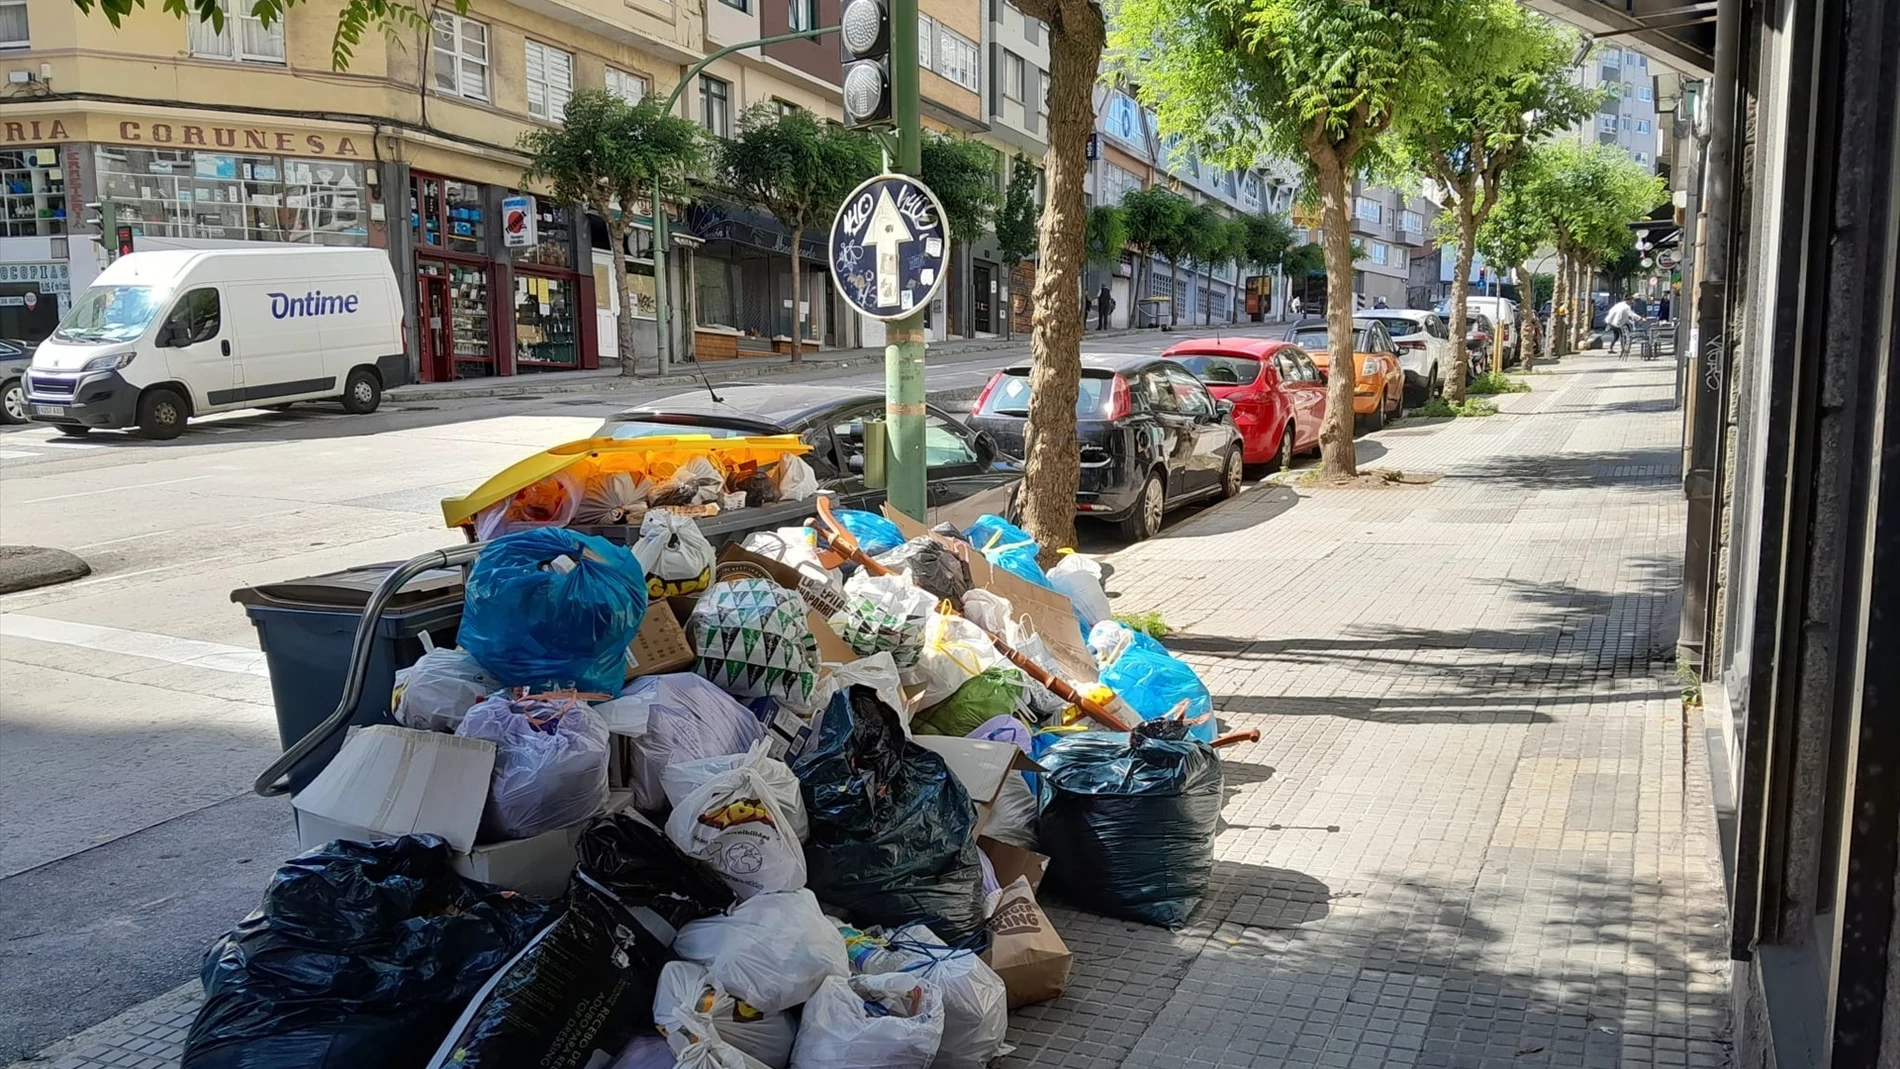 Basura acumulada en las calles de A Coruña, con contenedores repletos